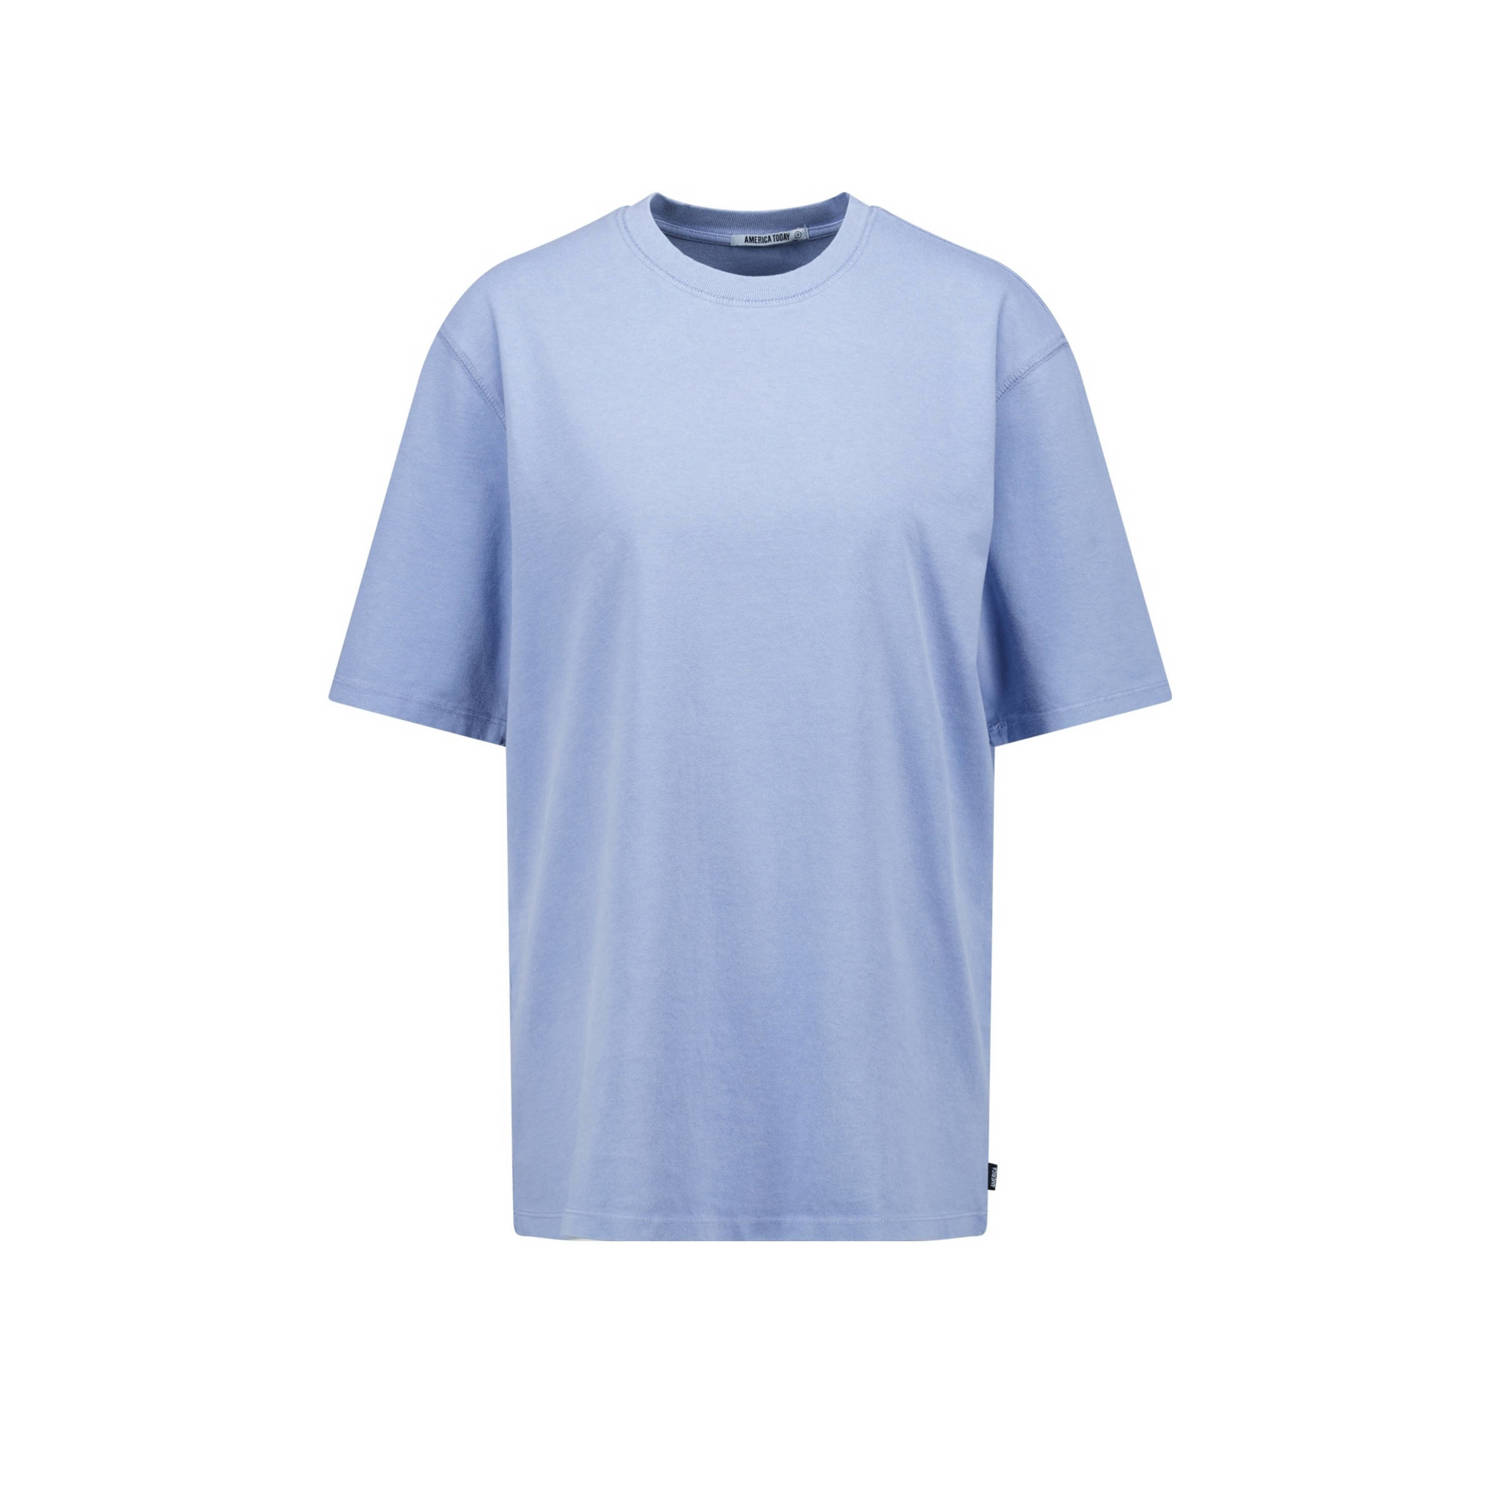 America Today T-shirt lichtblauw